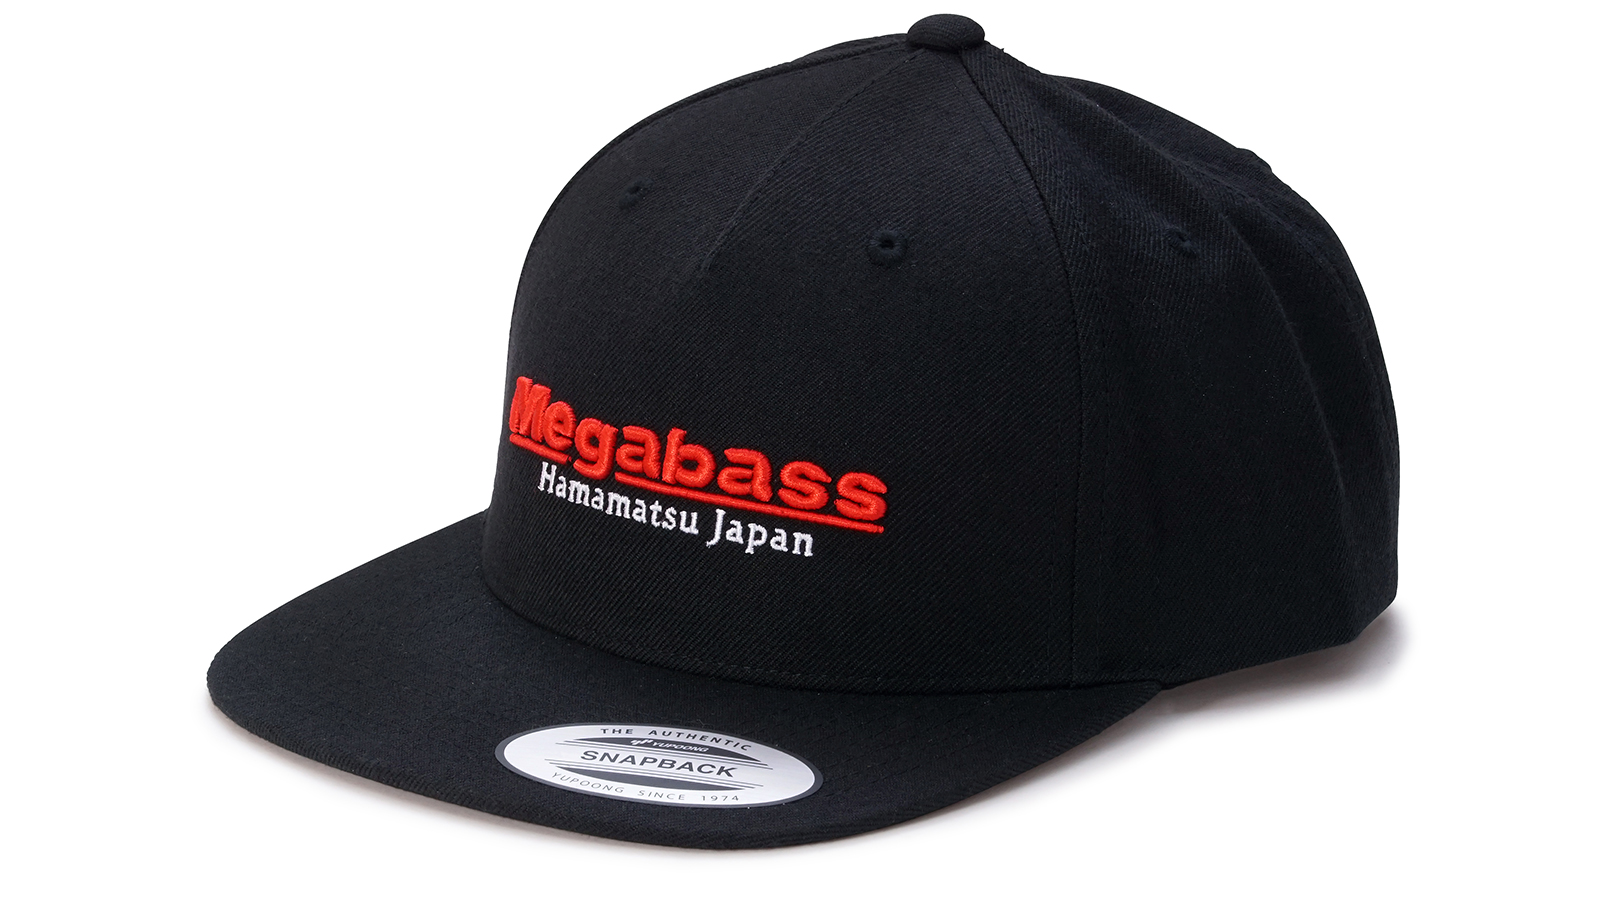 CLASSIC SNAPBACK BLACK/RED - Megabass